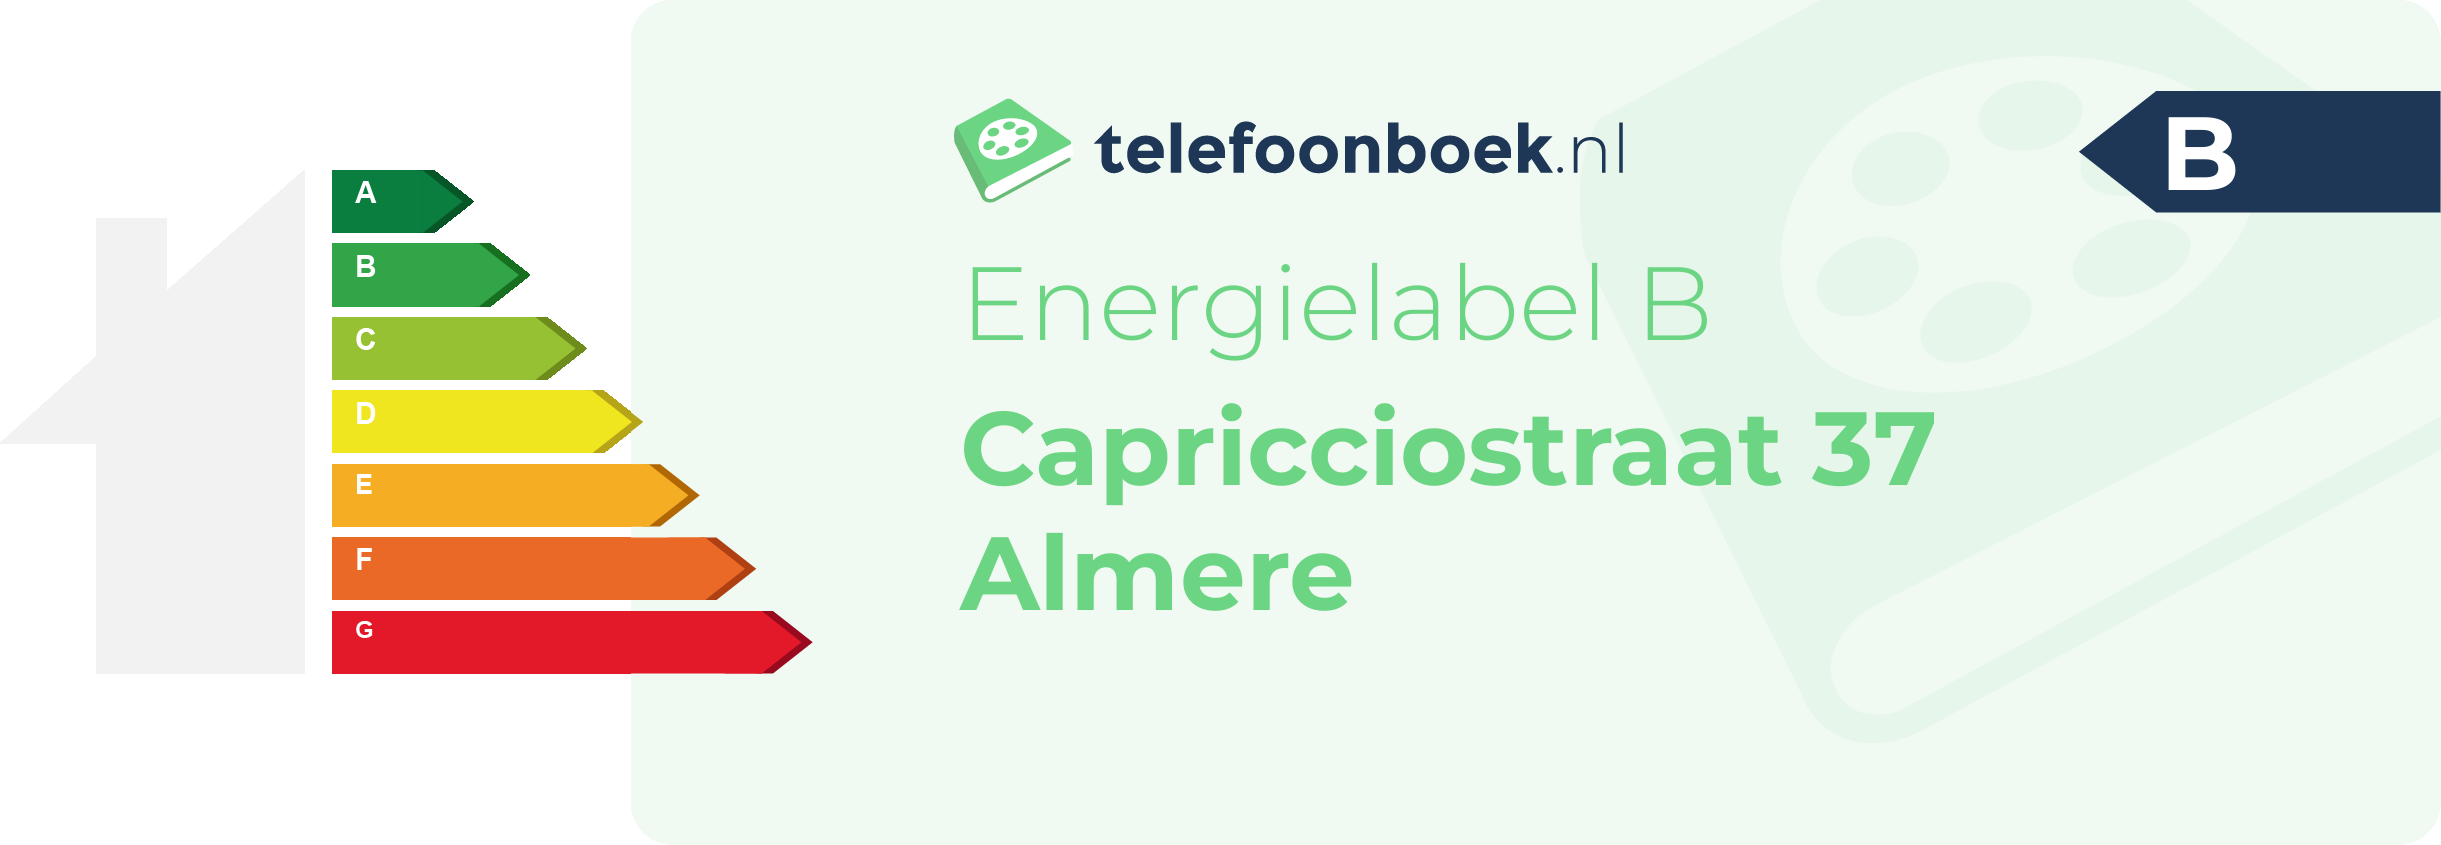 Energielabel Capricciostraat 37 Almere